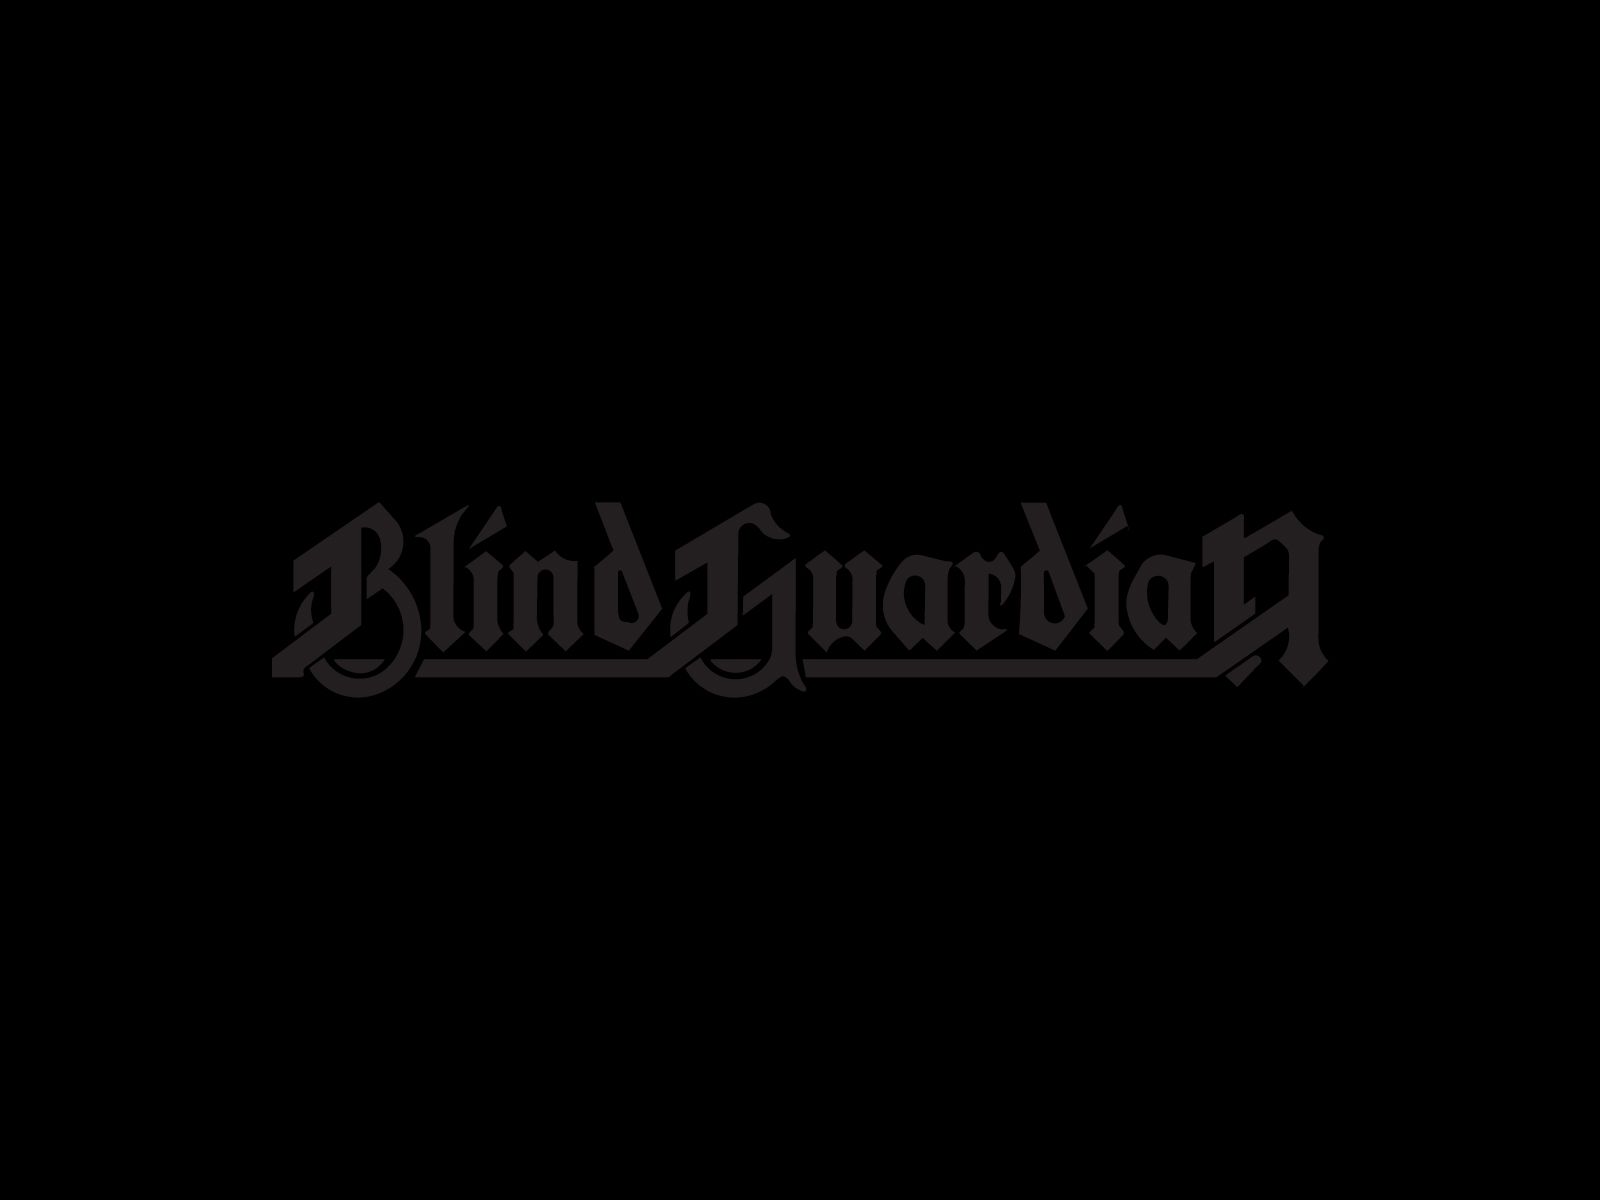 Blind Guardian logo and wallpaper Band logos - Rock band logos